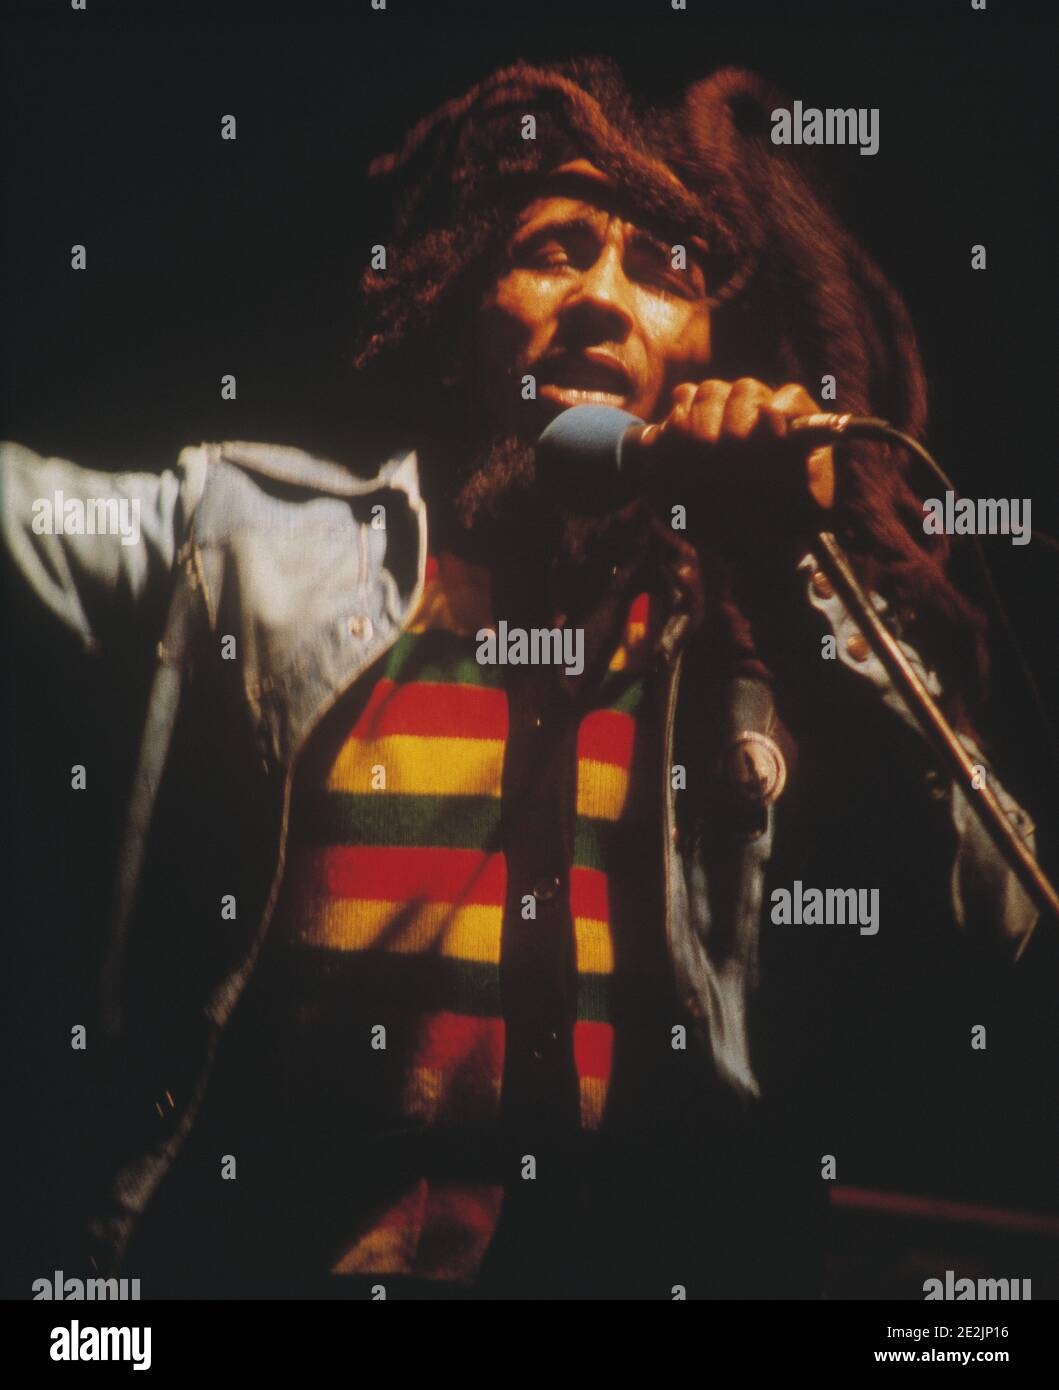 Celebrity. Singer Bob Marley in concert. Perth. Western Australia.1979. Stock Photo